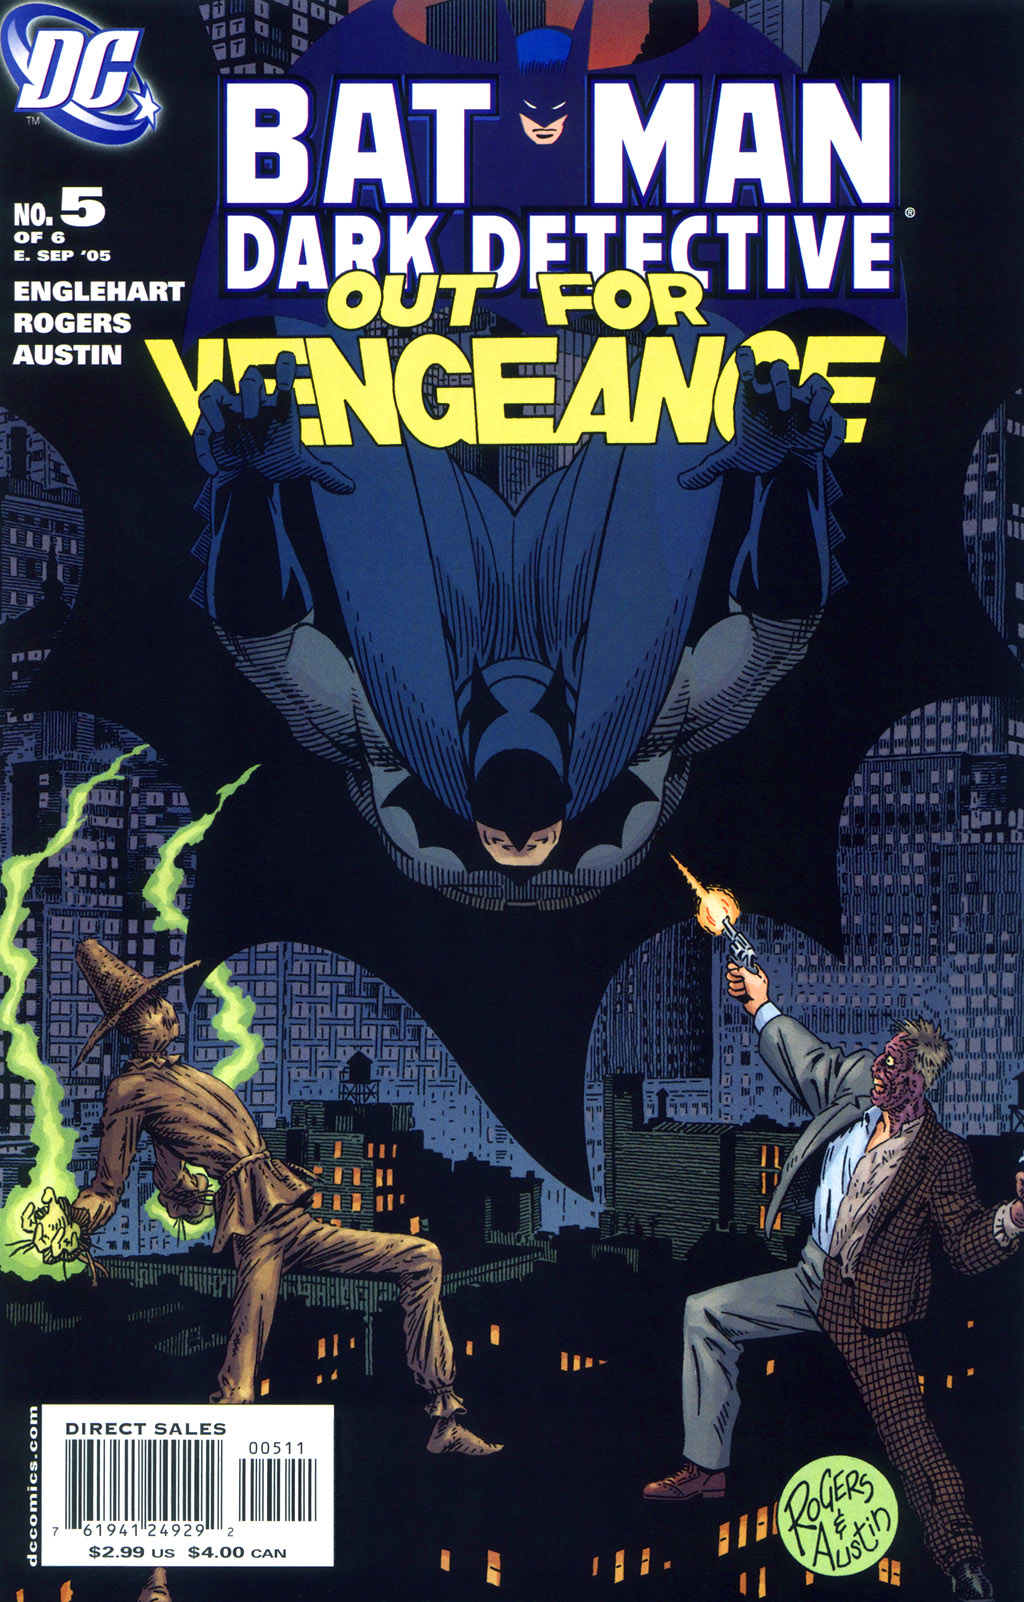 Batman Dark Detective Issue 5 | Read Batman Dark Detective Issue 5 comic  online in high quality. Read Full Comic online for free - Read comics online  in high quality .|